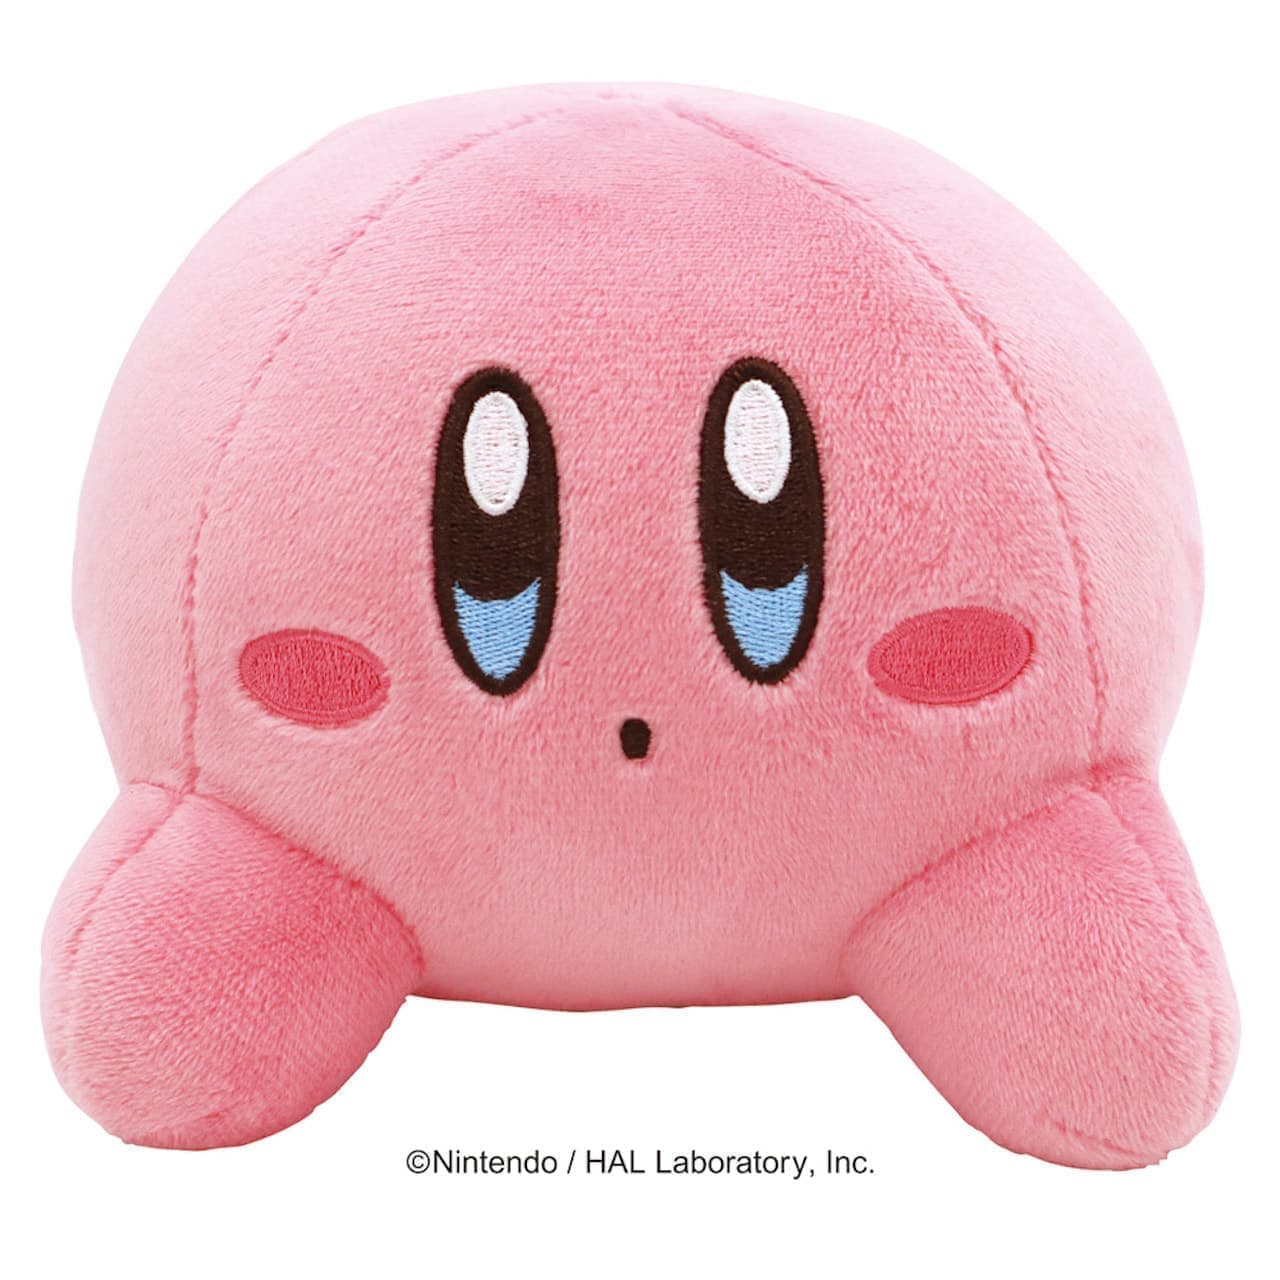 Heart "Kirby Star Plush Toy